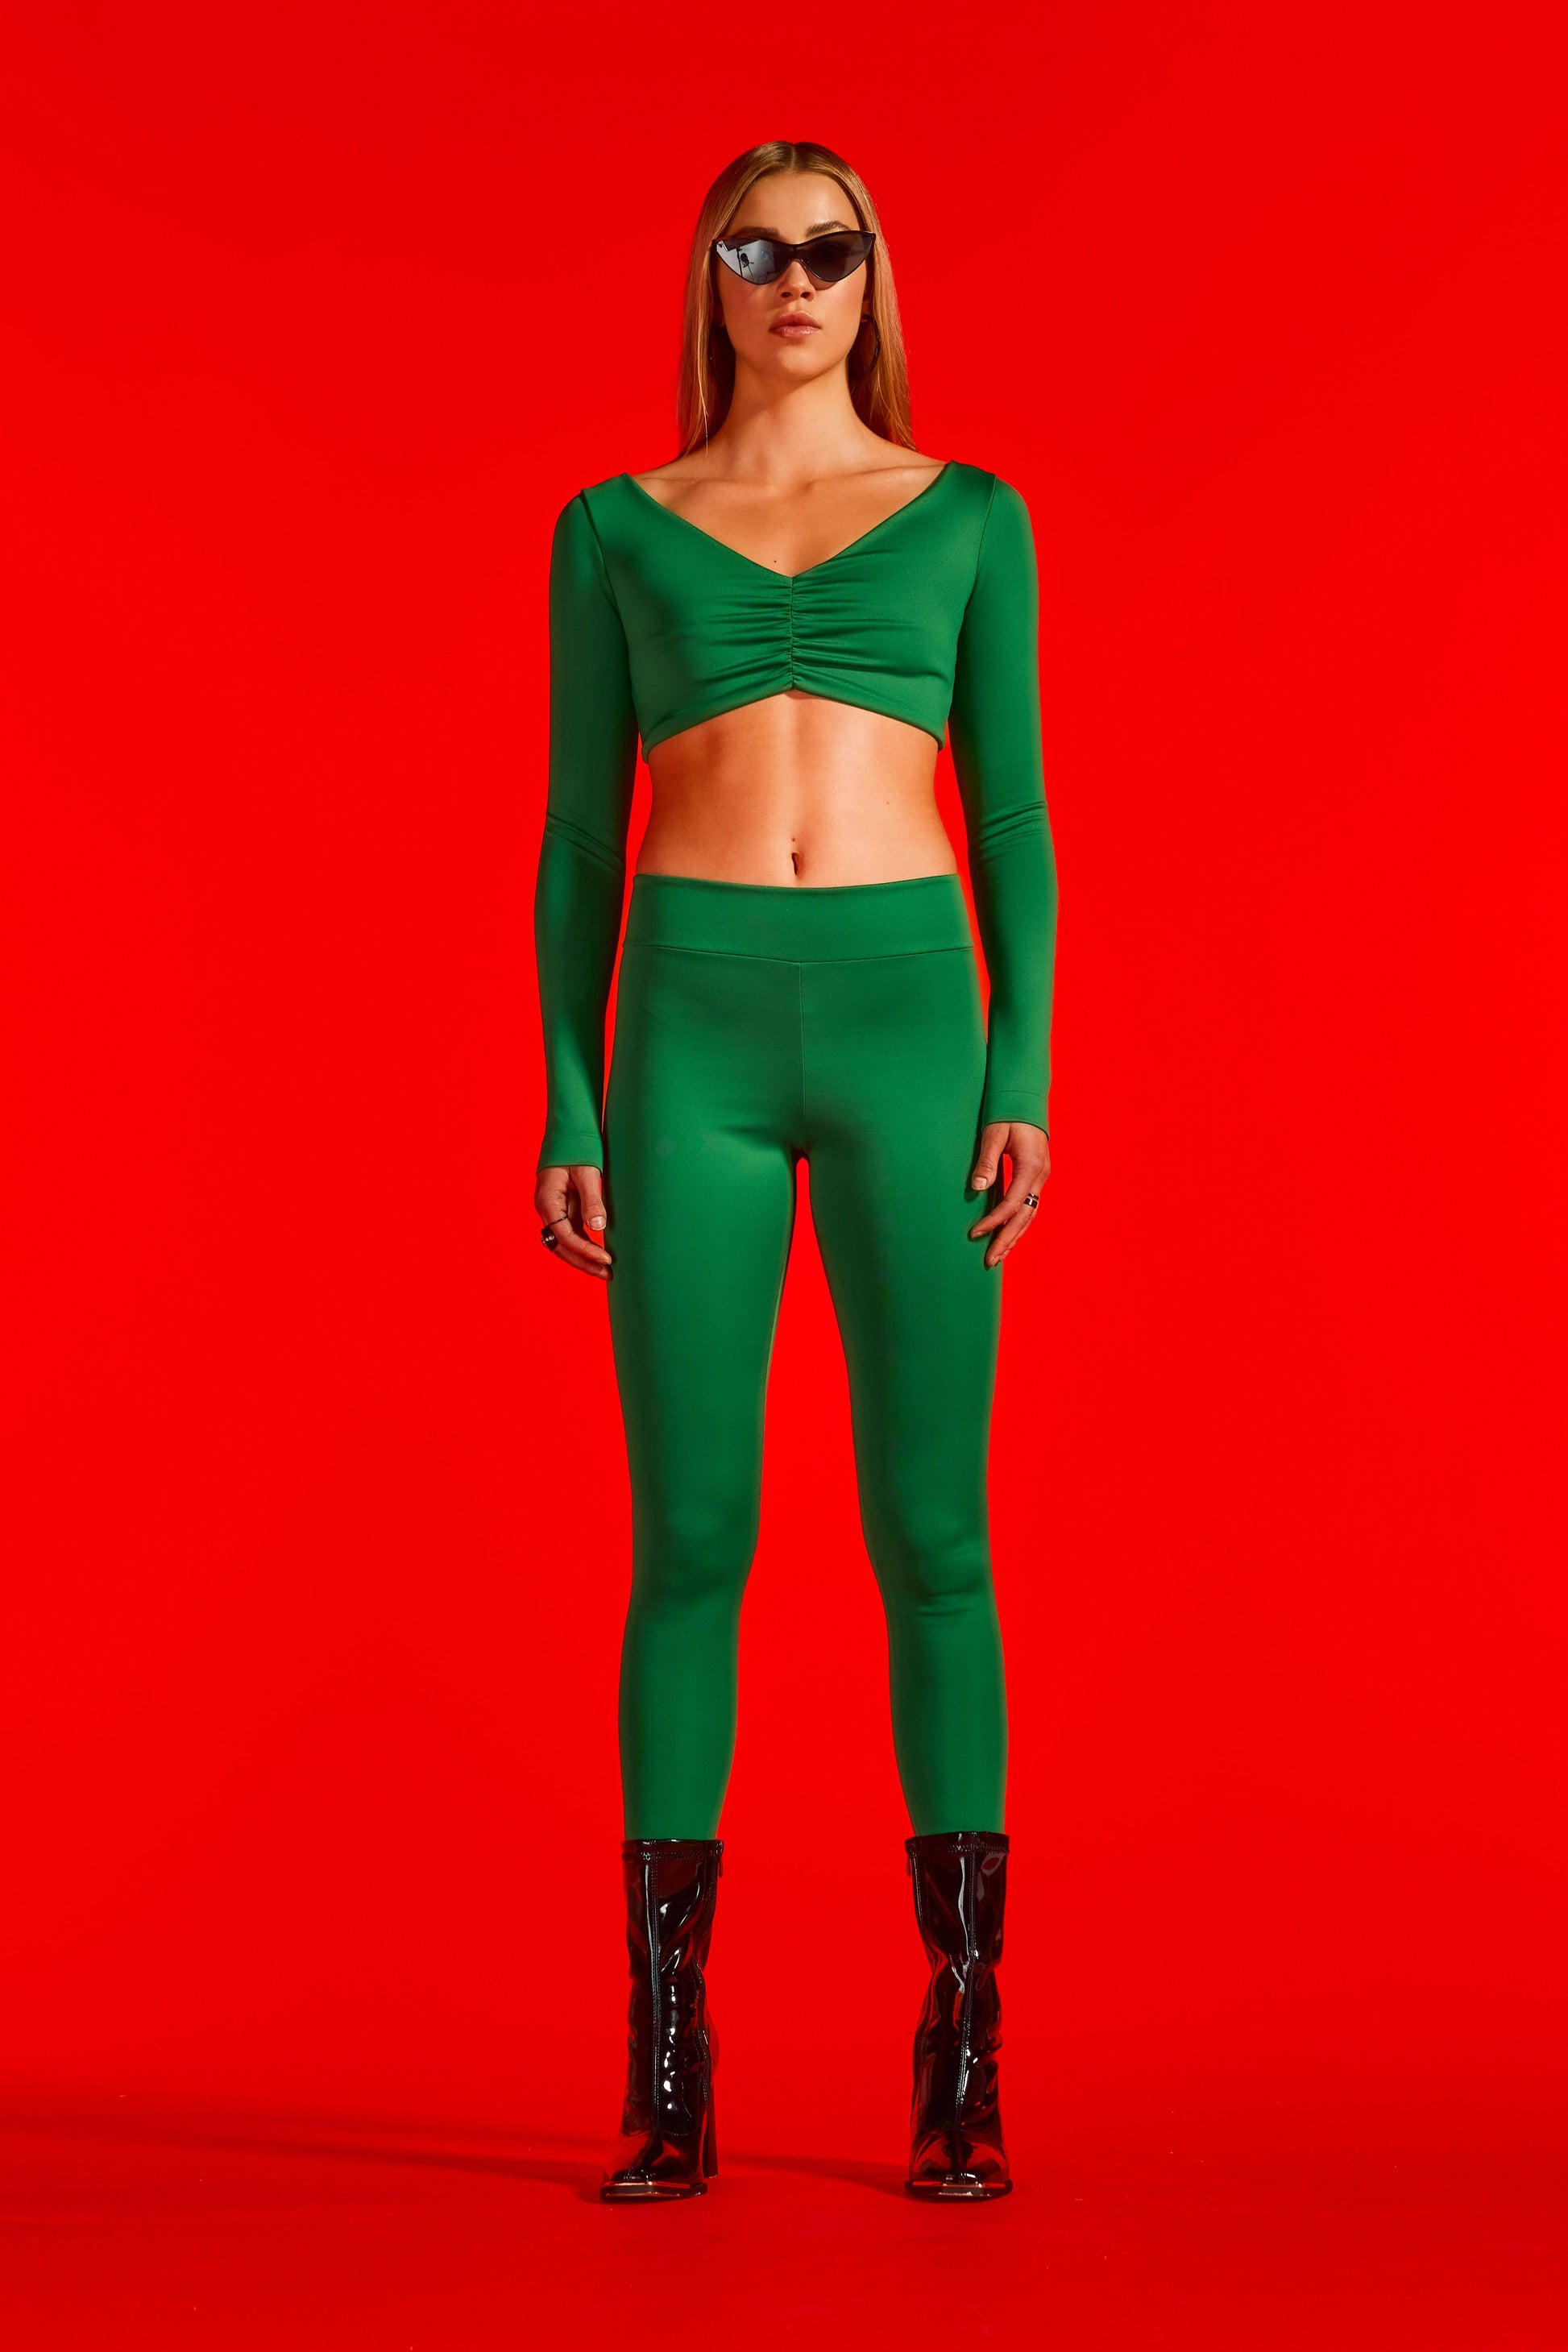 Green high-waisted knit performance leggings for women